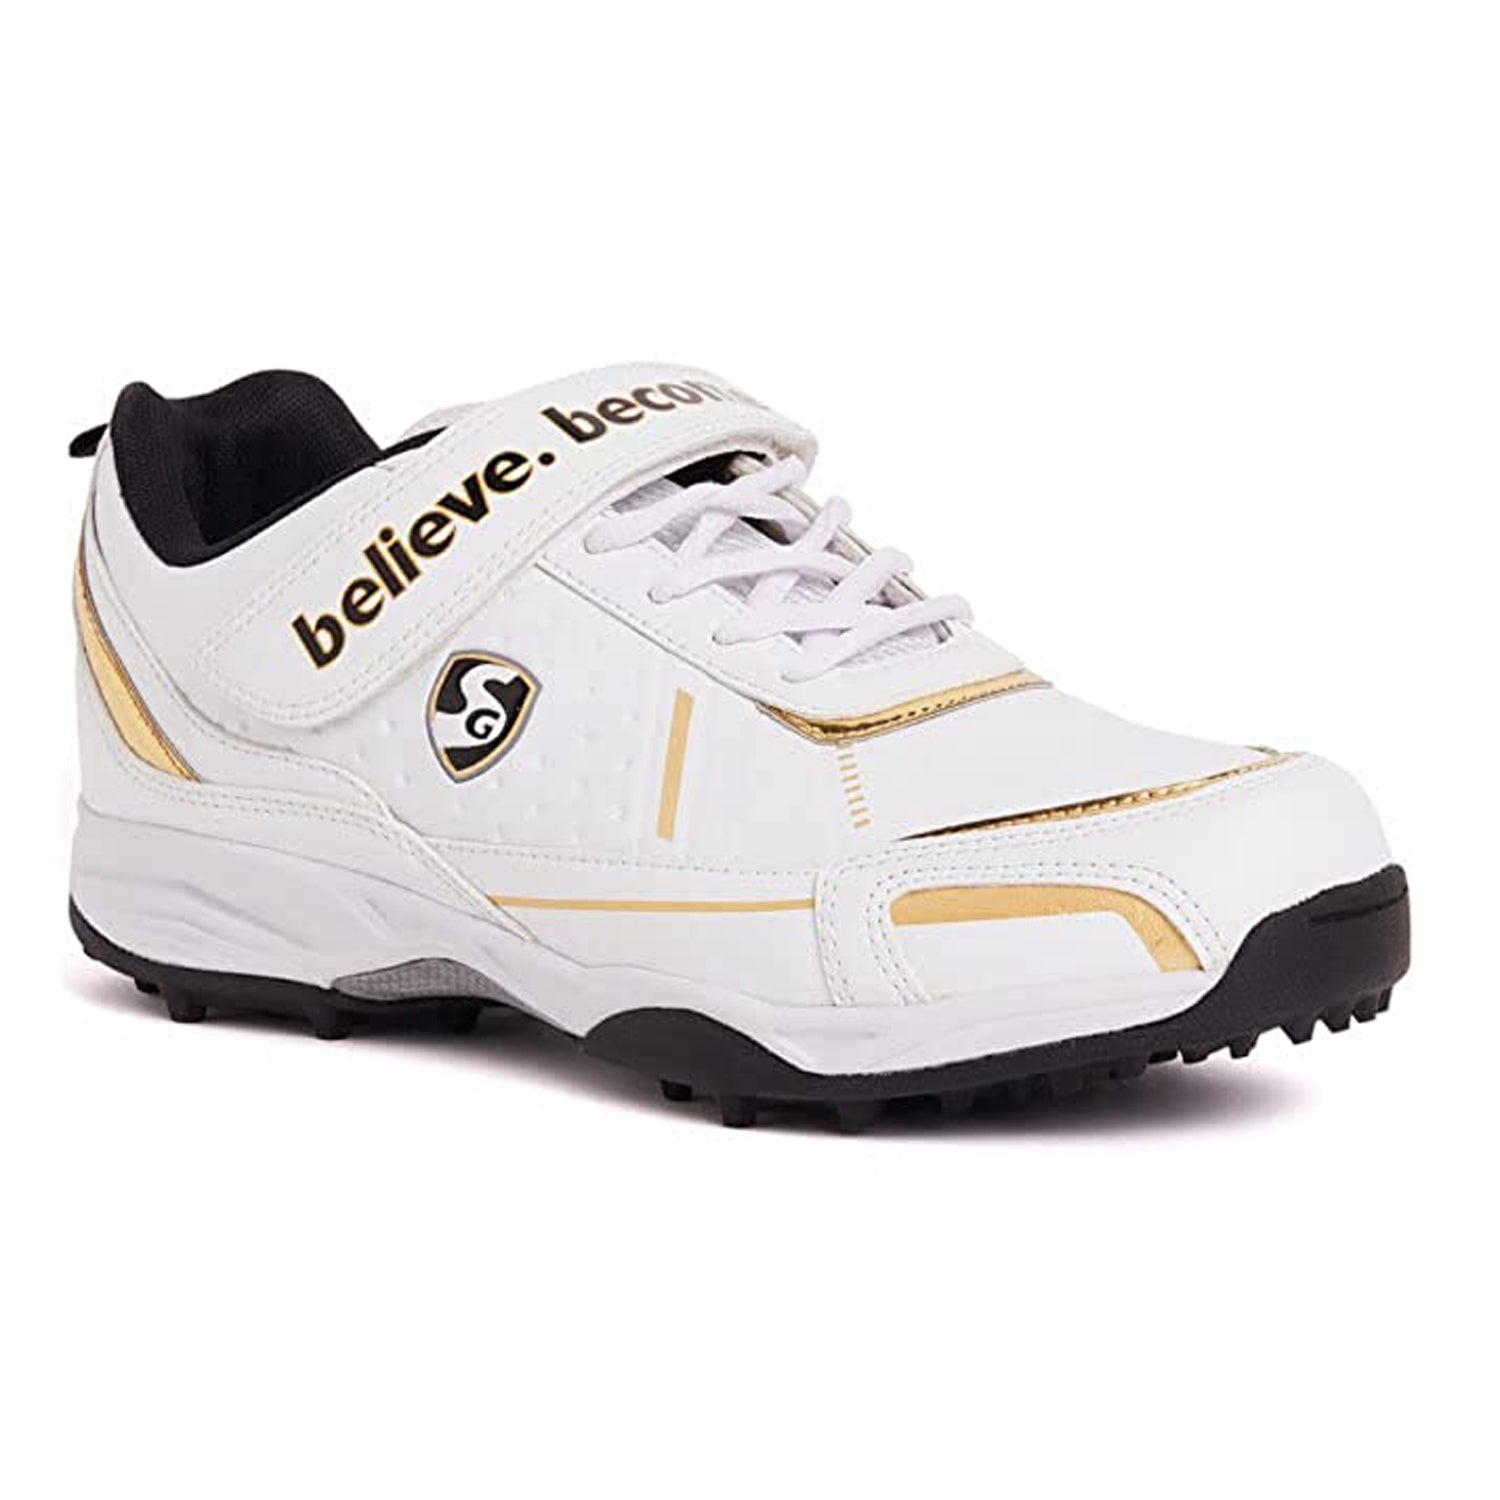 SG Century 5.0 Cricket Shoes - Best Price online Prokicksports.com